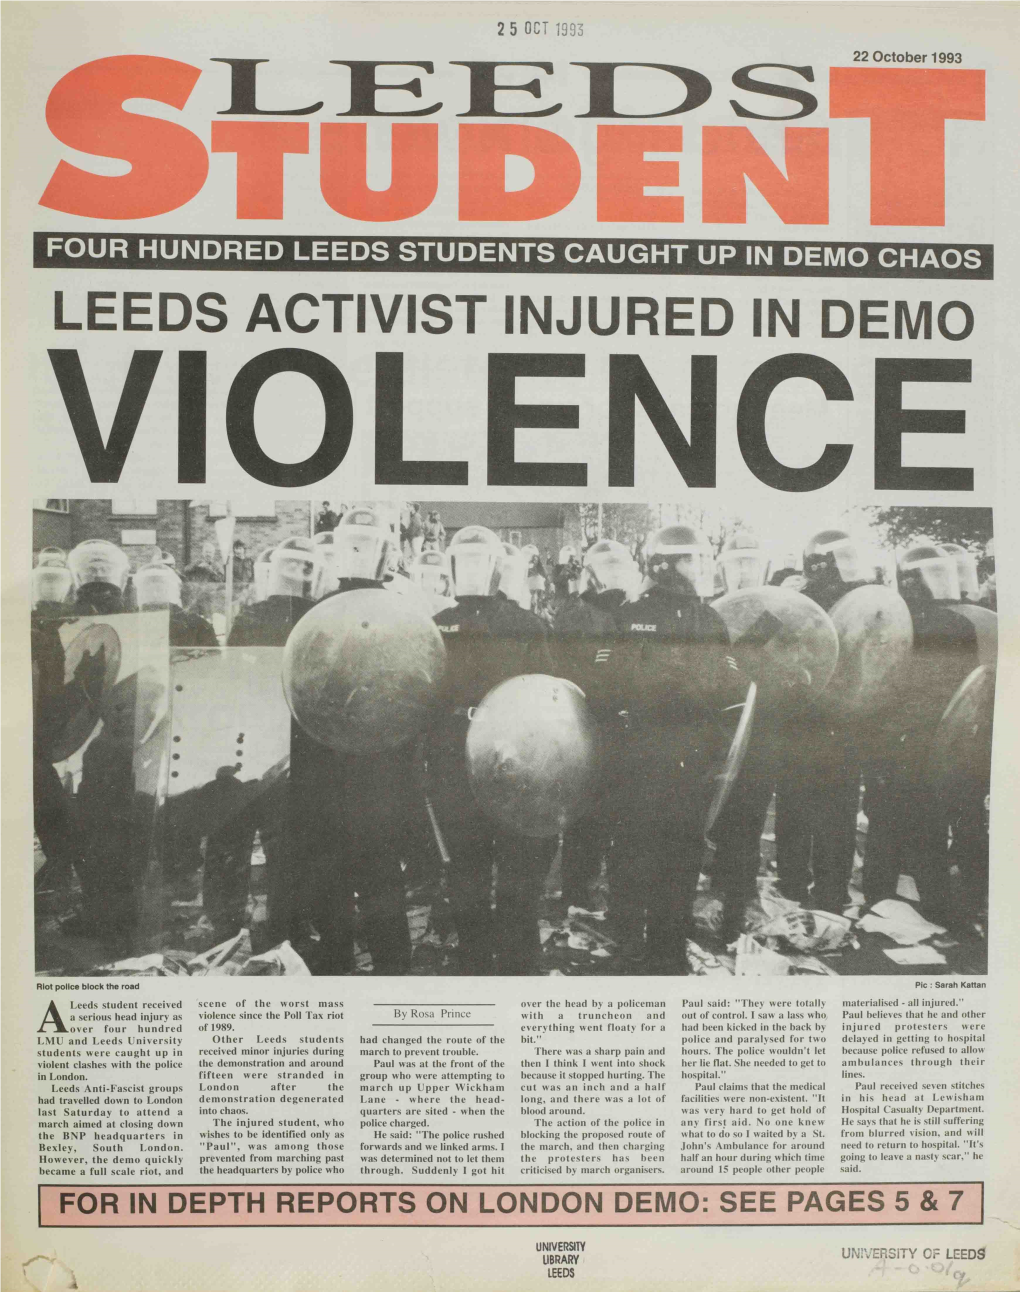 Leeds Activist Injured in Demo Olence